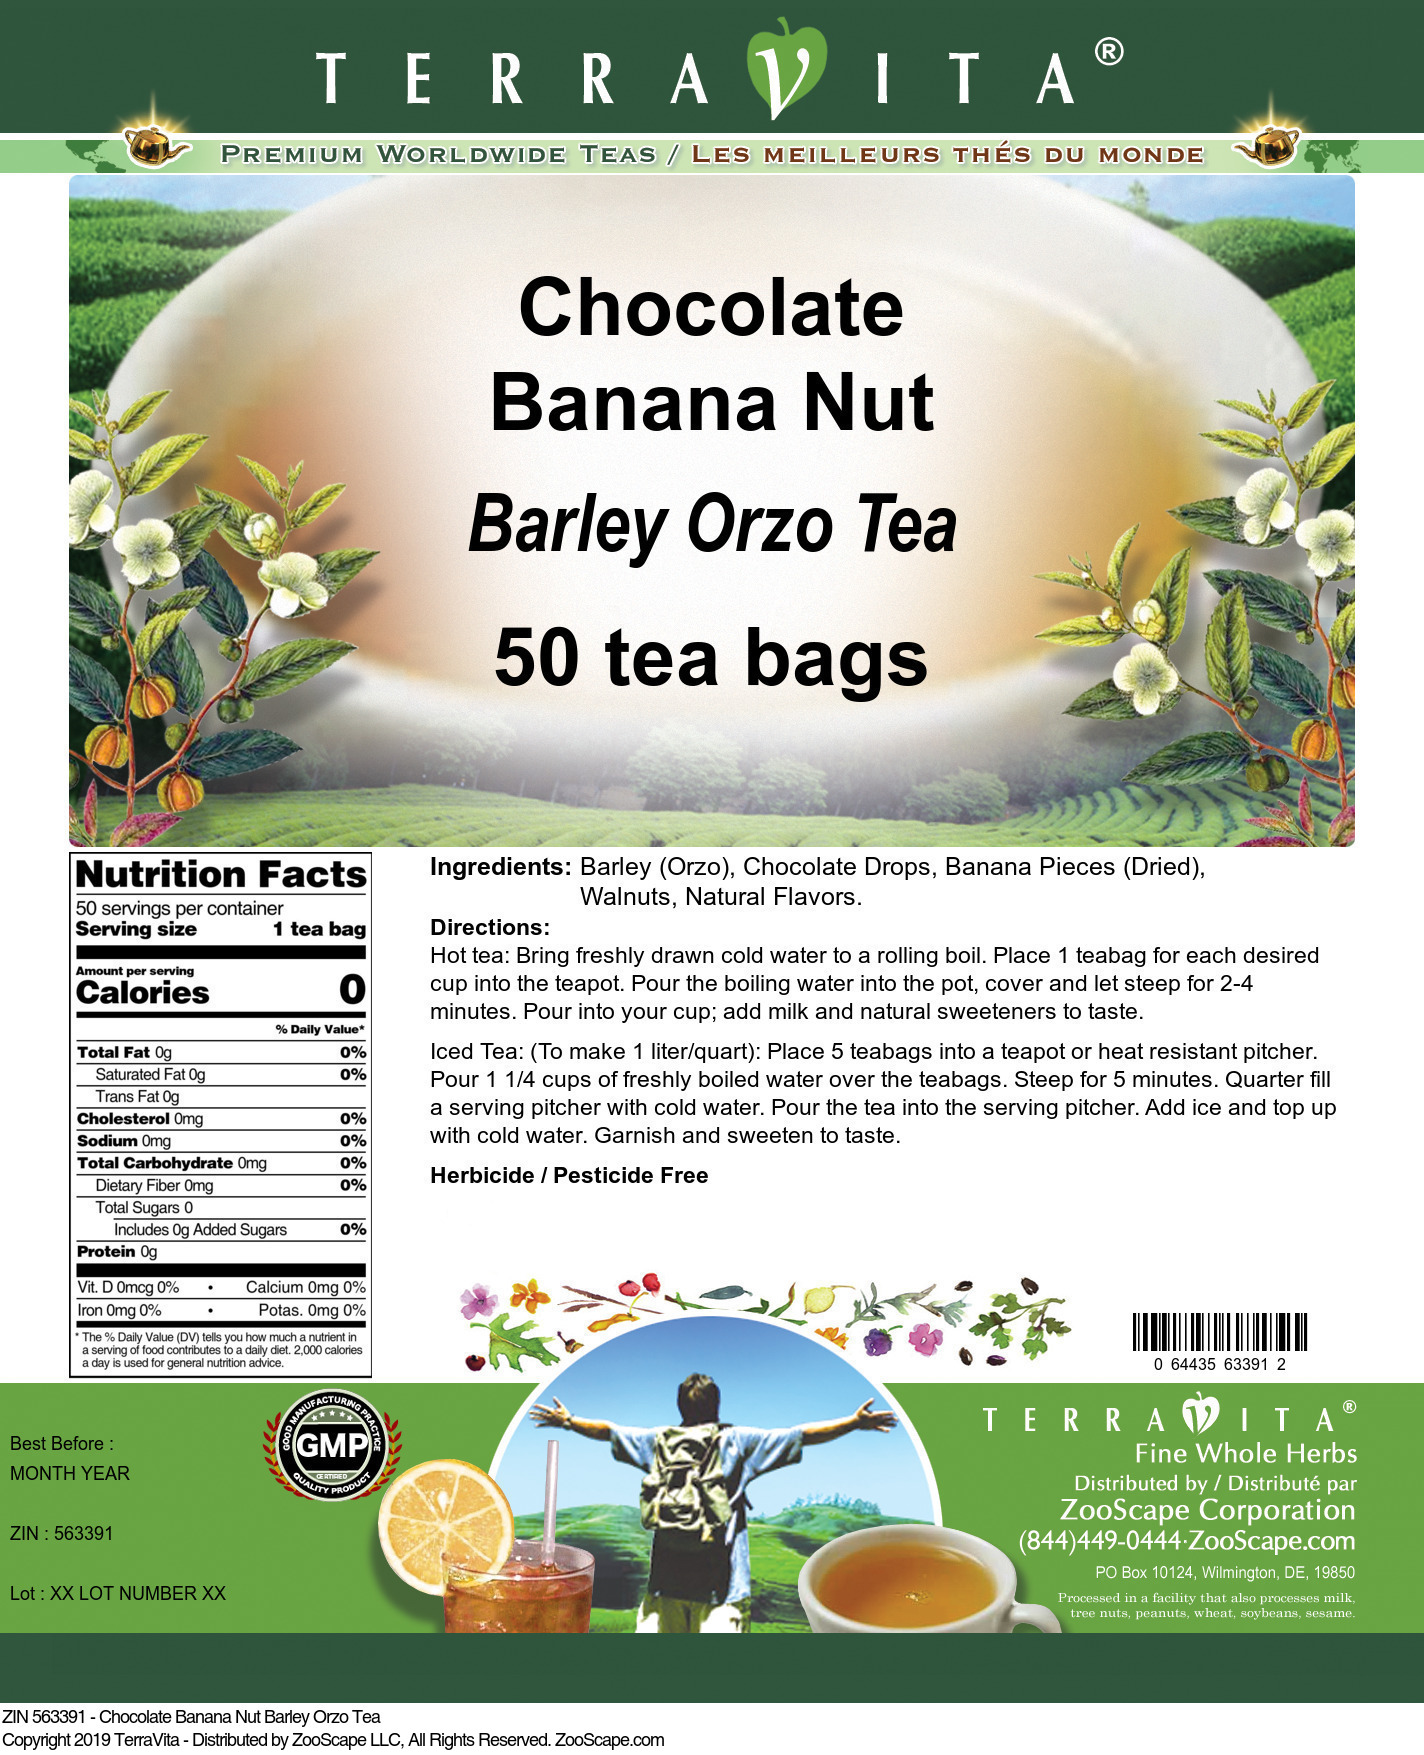 Chocolate Banana Nut Barley Orzo Tea - Label